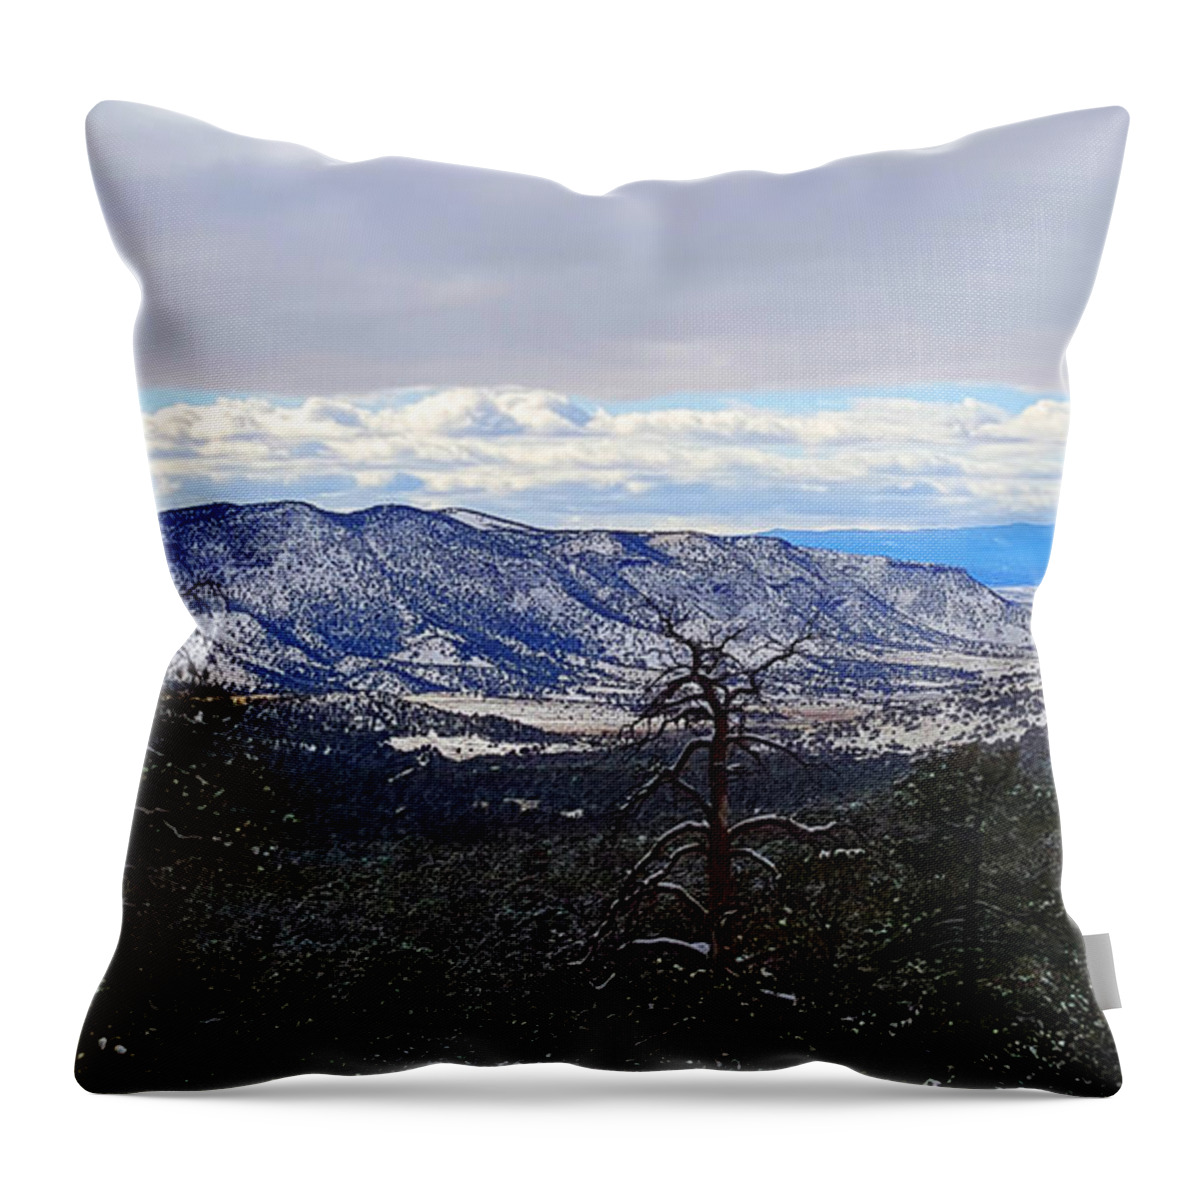 Southwest Landscape Throw Pillow featuring the photograph Blue Hill by Robert WK Clark